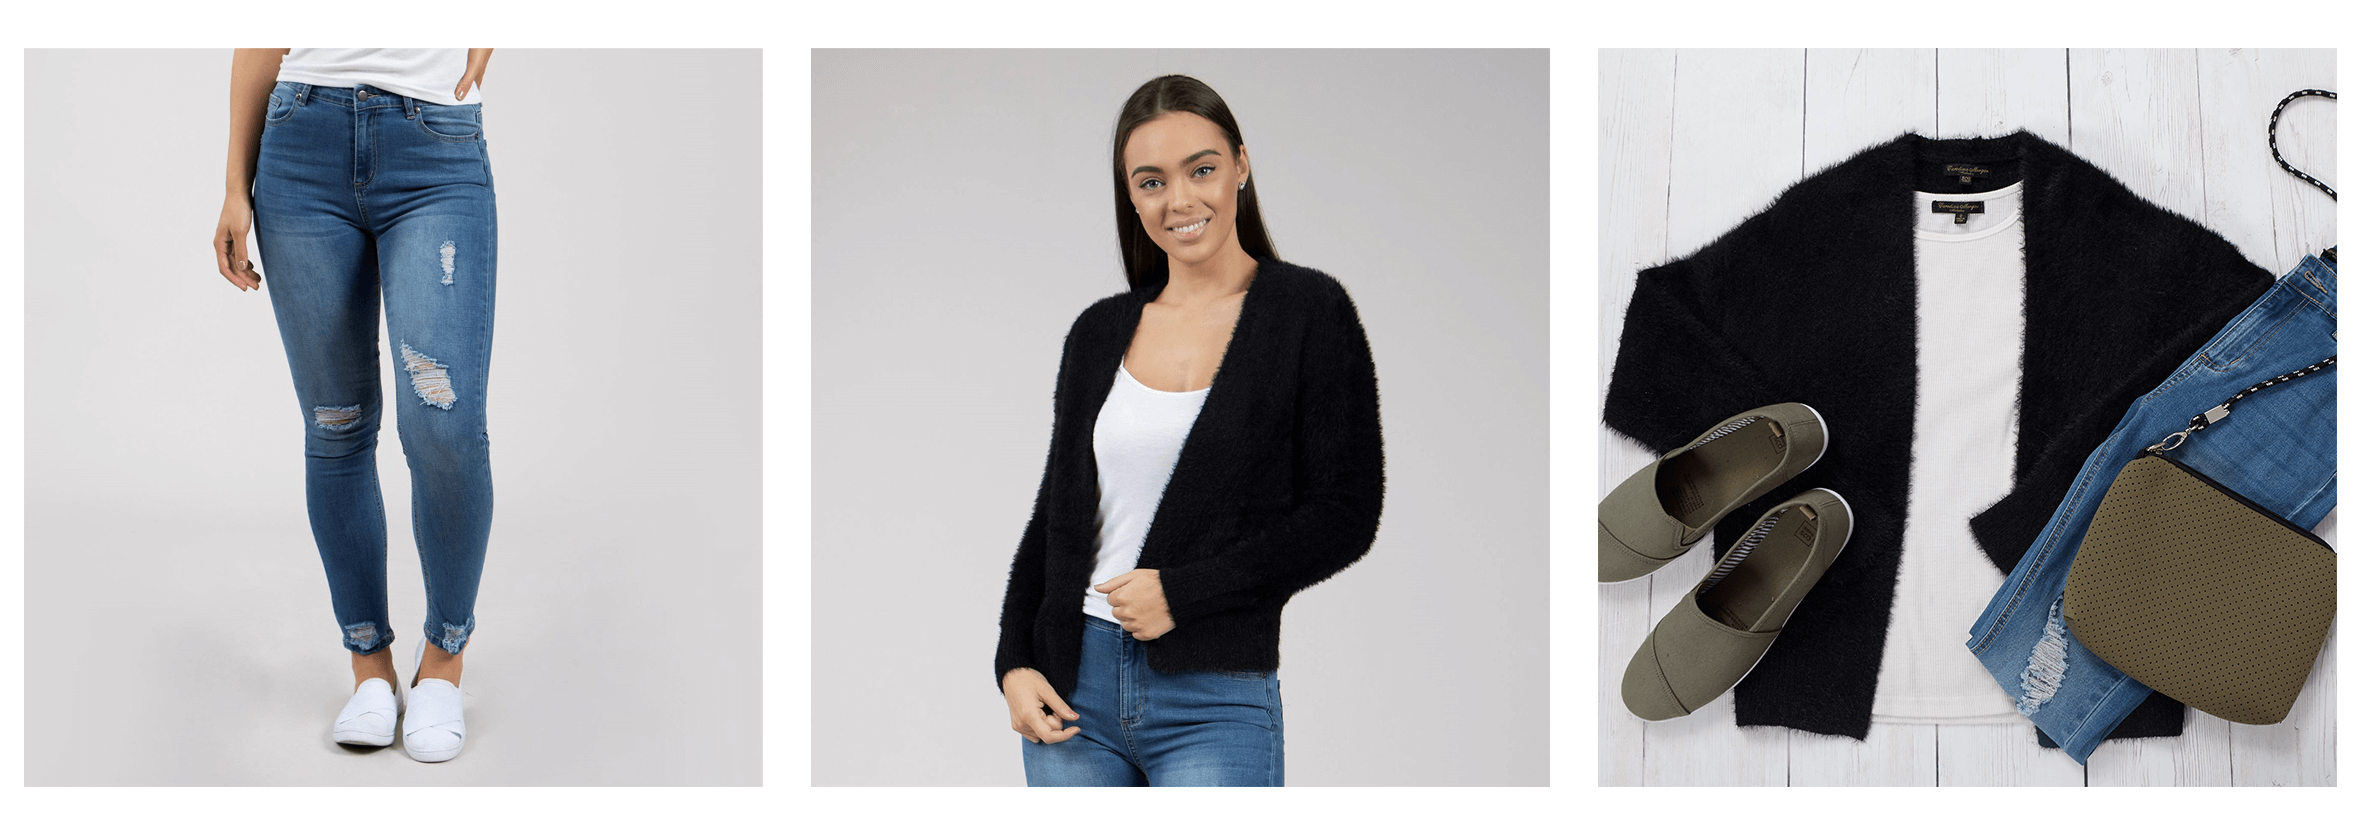 EOFYS Blowout 2 - Outfit Under $100 | Femme Connection